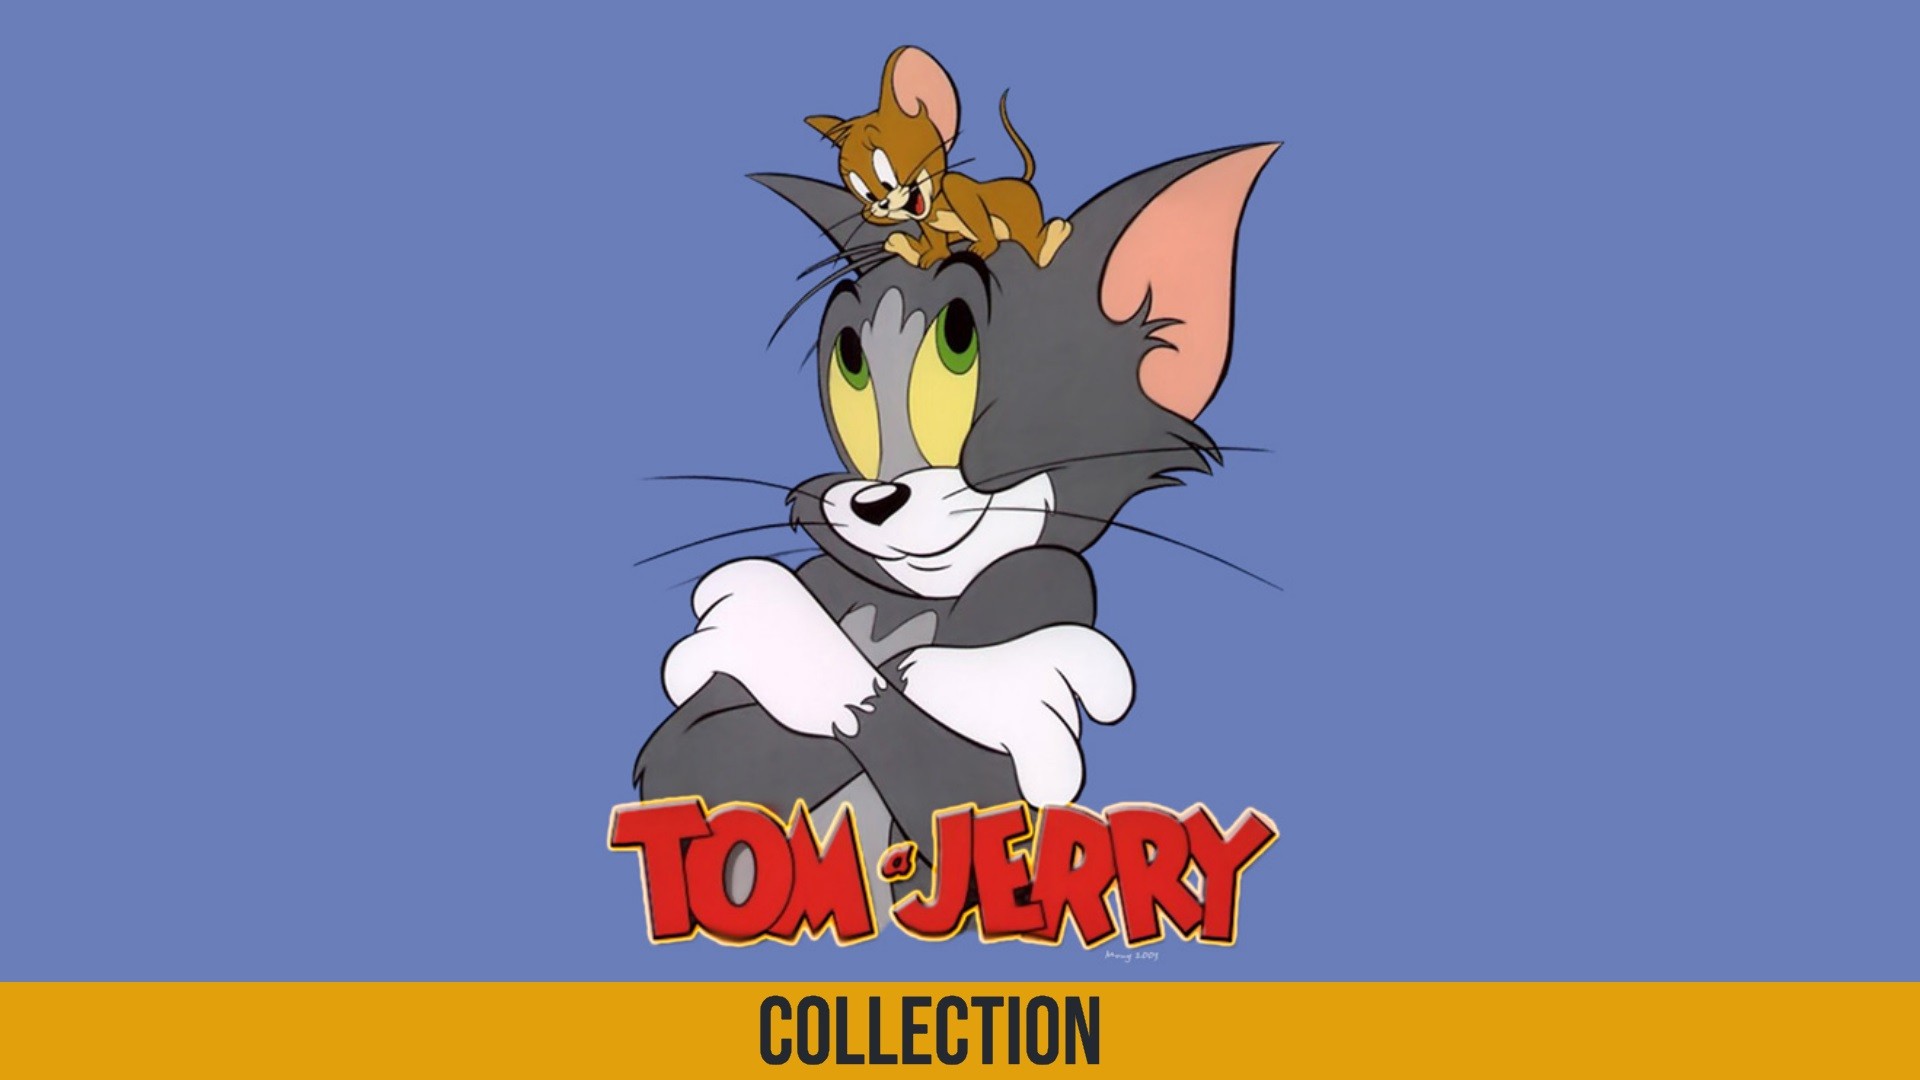 Том и джерри живут. Tom 7 Jerry. Том и Джерри картинки. Мультяшные том и Джерри.